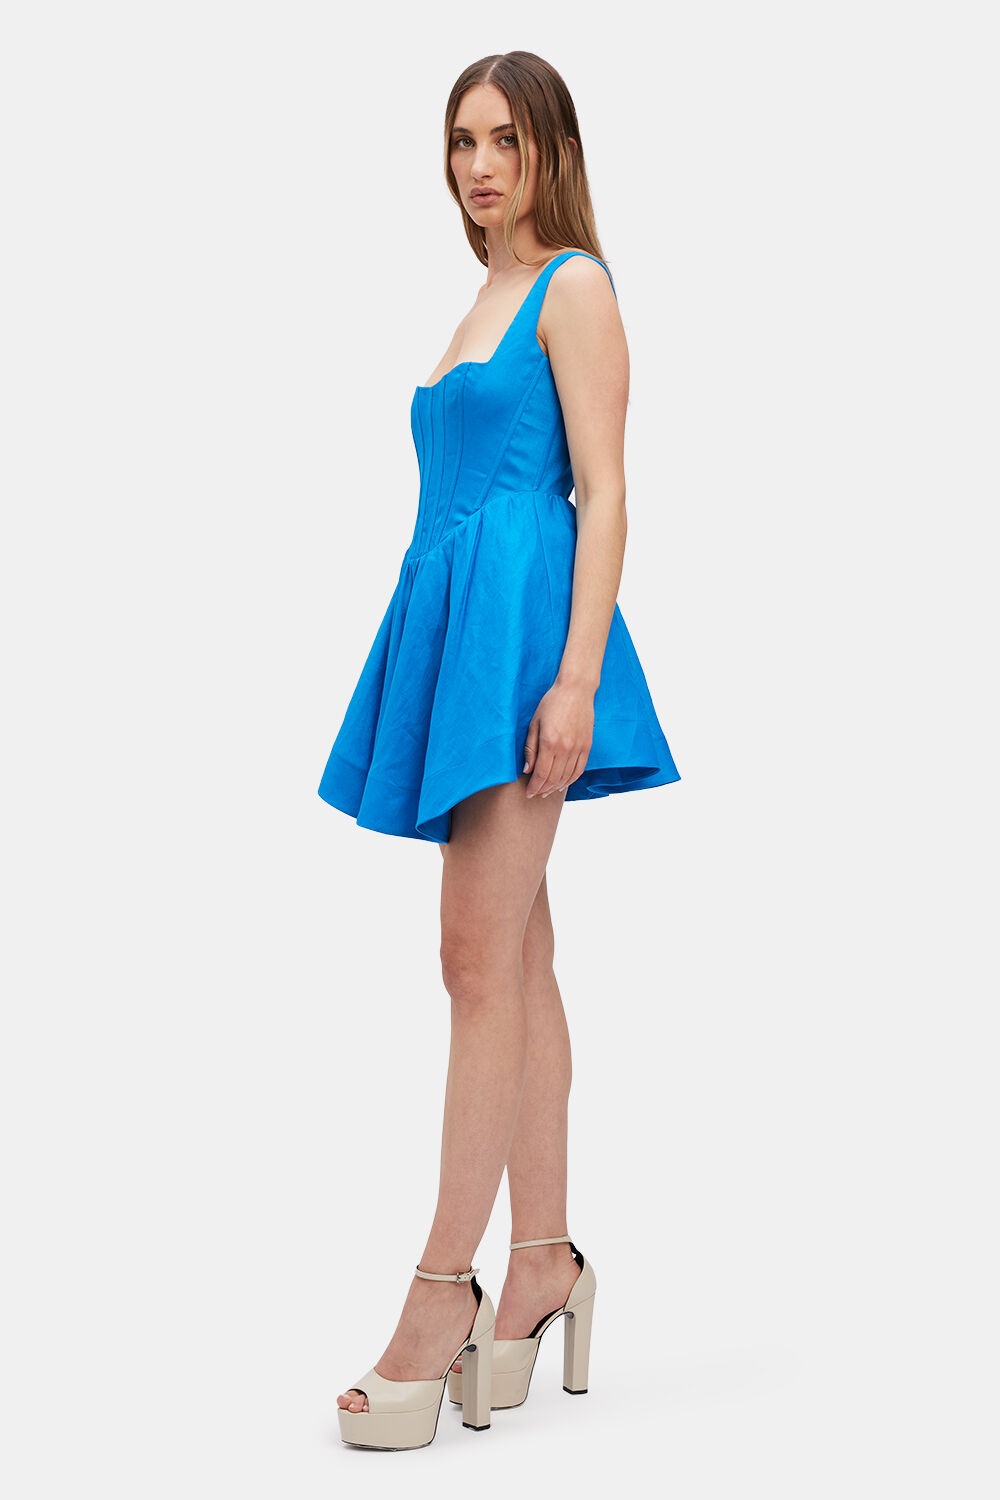 ZENAIDA CORSET MINI DRESS in colour ROYAL BLUE